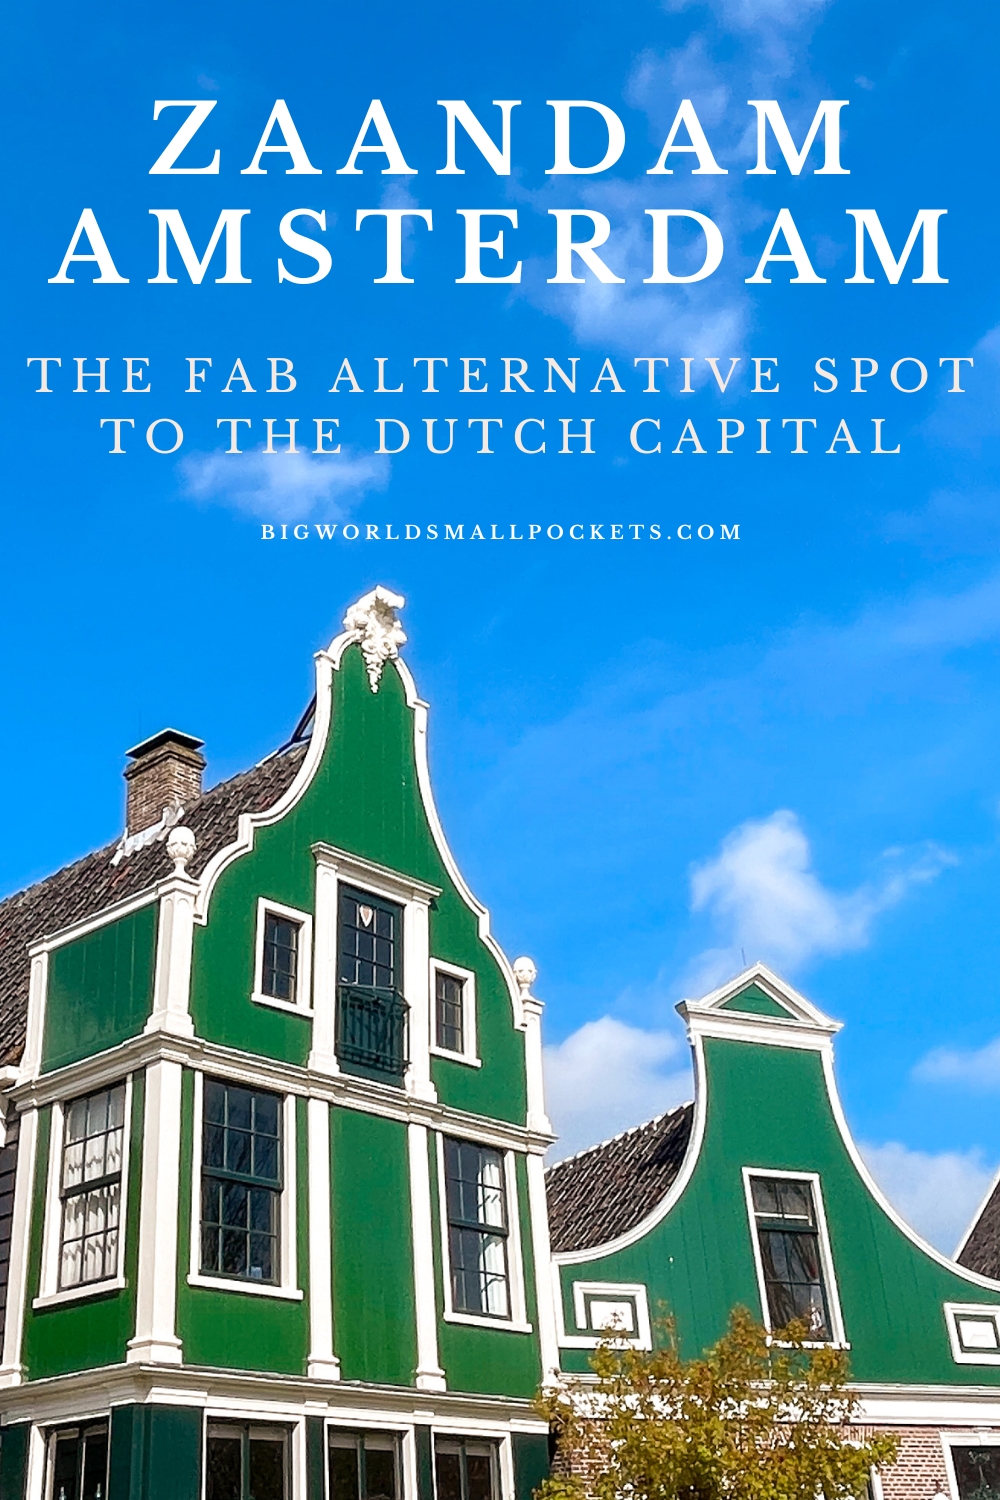 Zandaam, Amsterdam - Fab Alternative Spot to the Dutch Capital